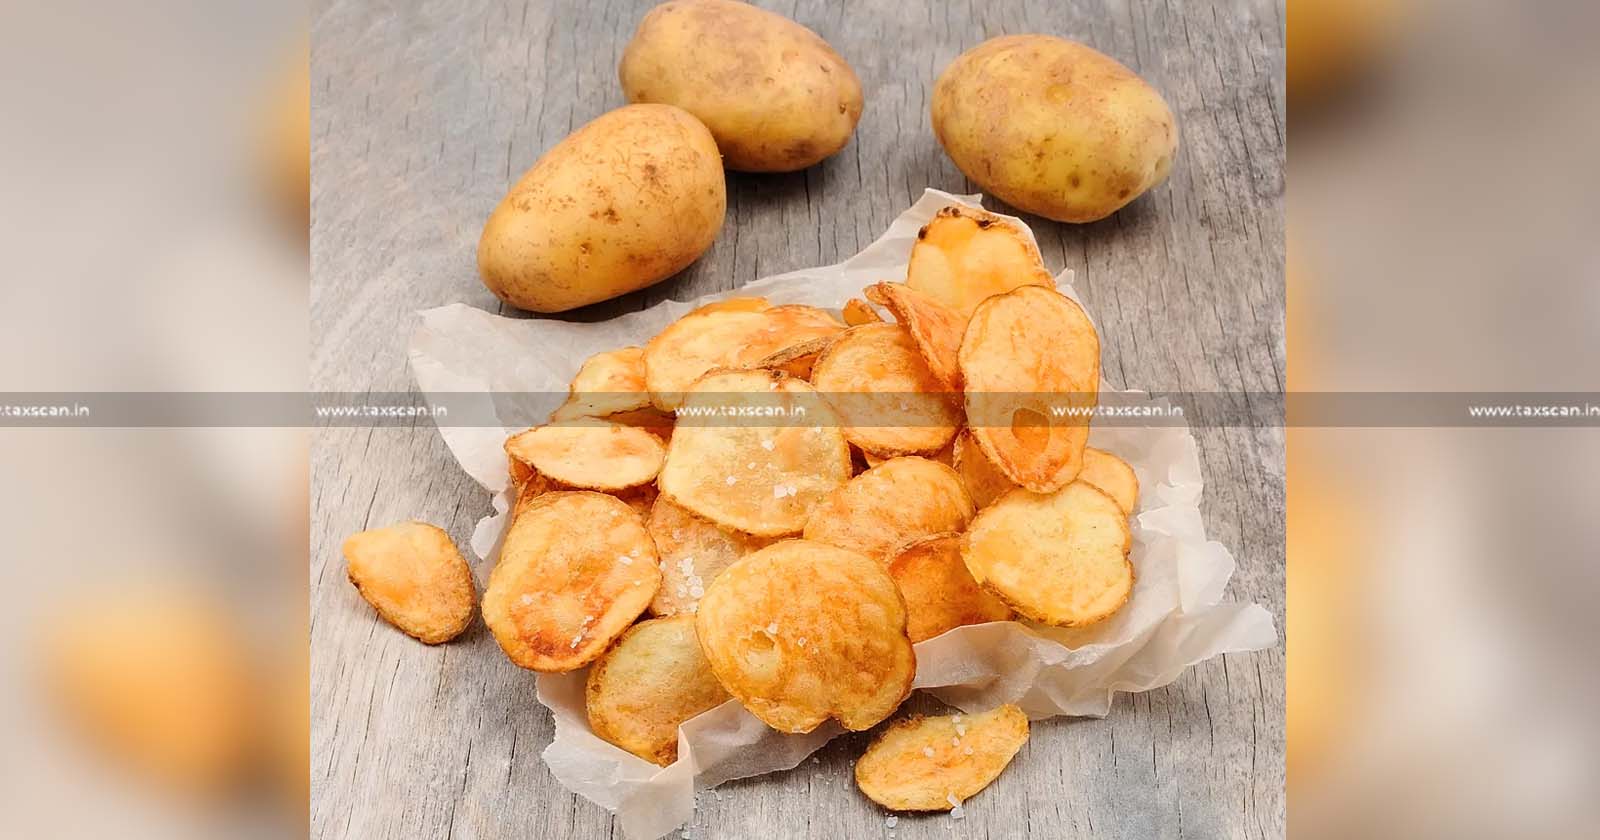 Potato Products - Salted Flavoured Chips - Sev Mamara - GST - Gujarat AAR - taxscan